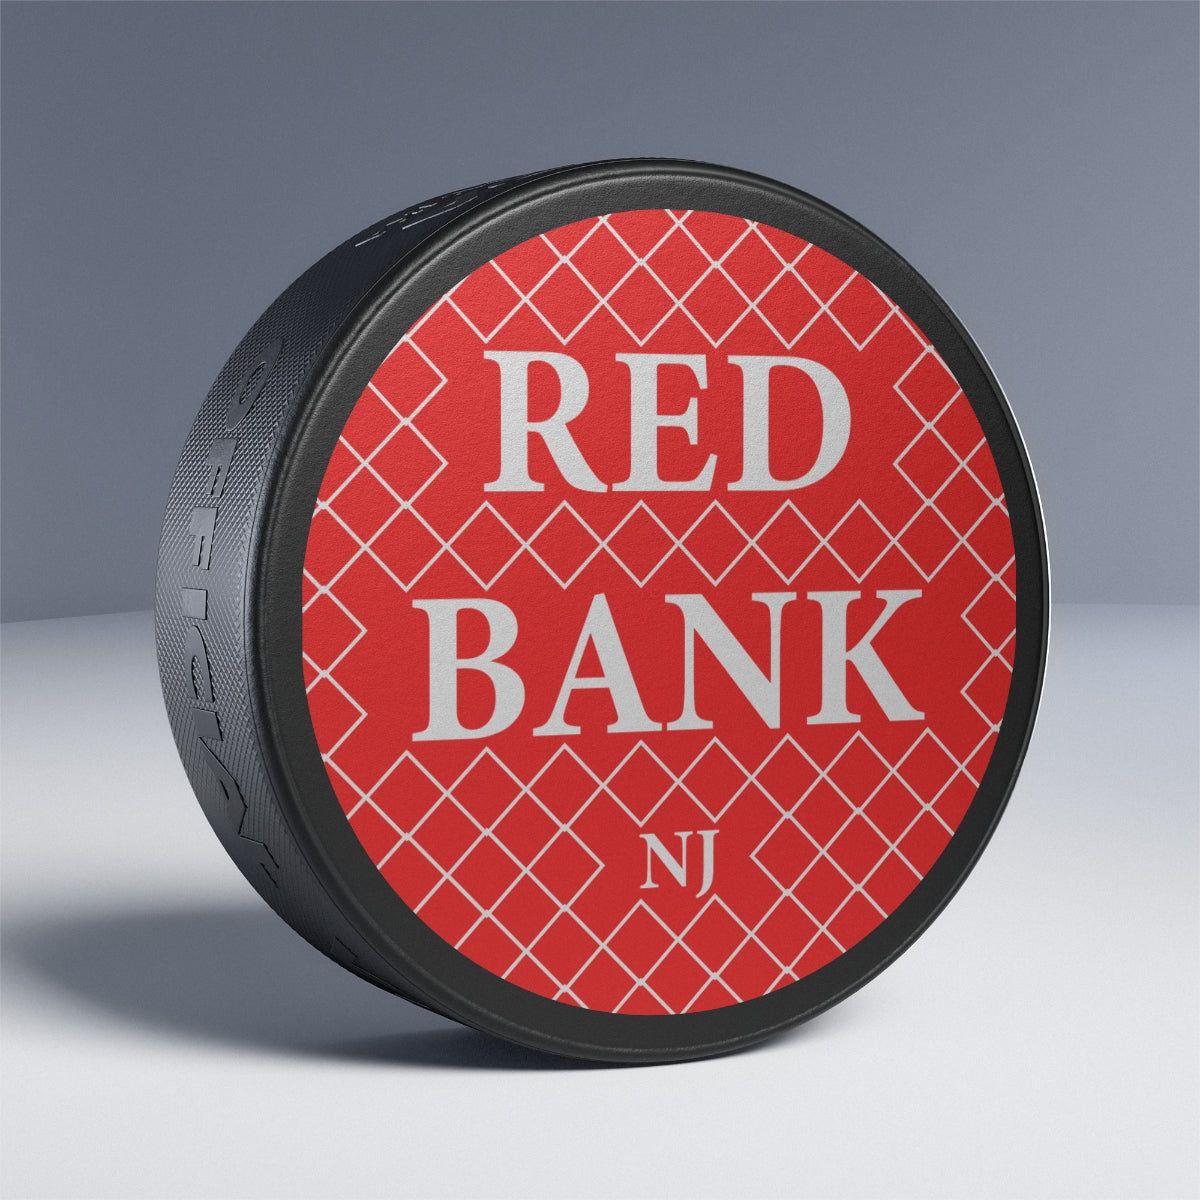 Red Bank Viceroy Hockey Puck